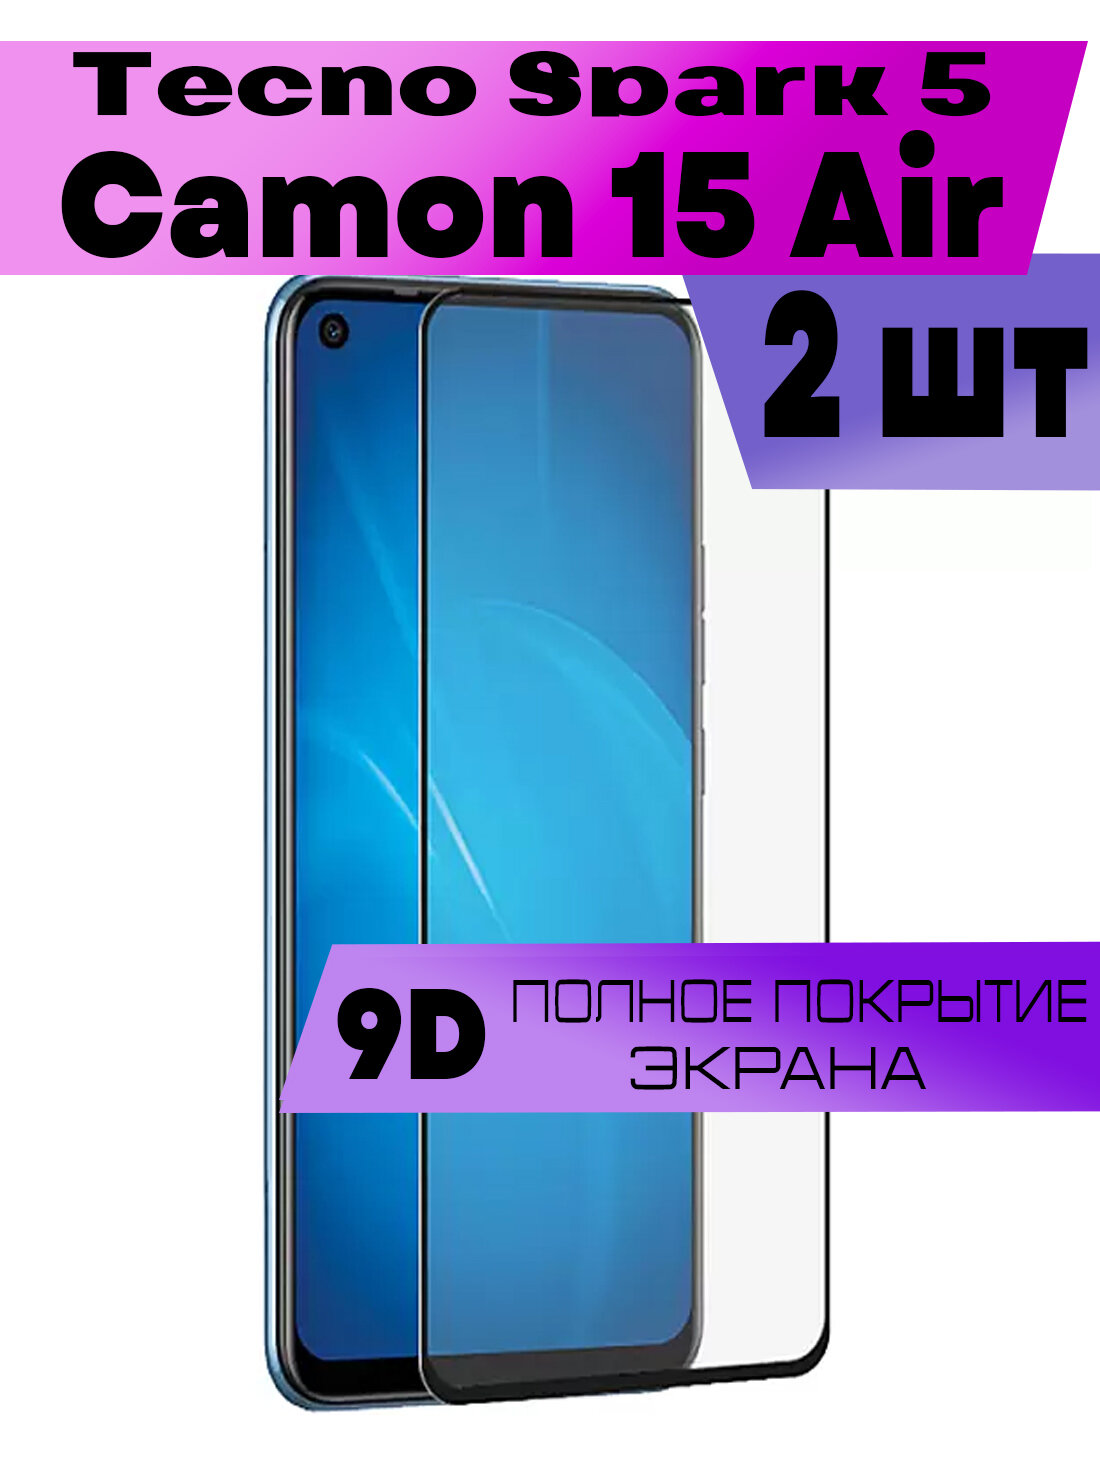 Комплект 3шт Защитное стекло 9D для Tecno Camon 15 Air Spark 5 Текно Камон 15 Аир Спарк 5 (на весь экран черная рамка)